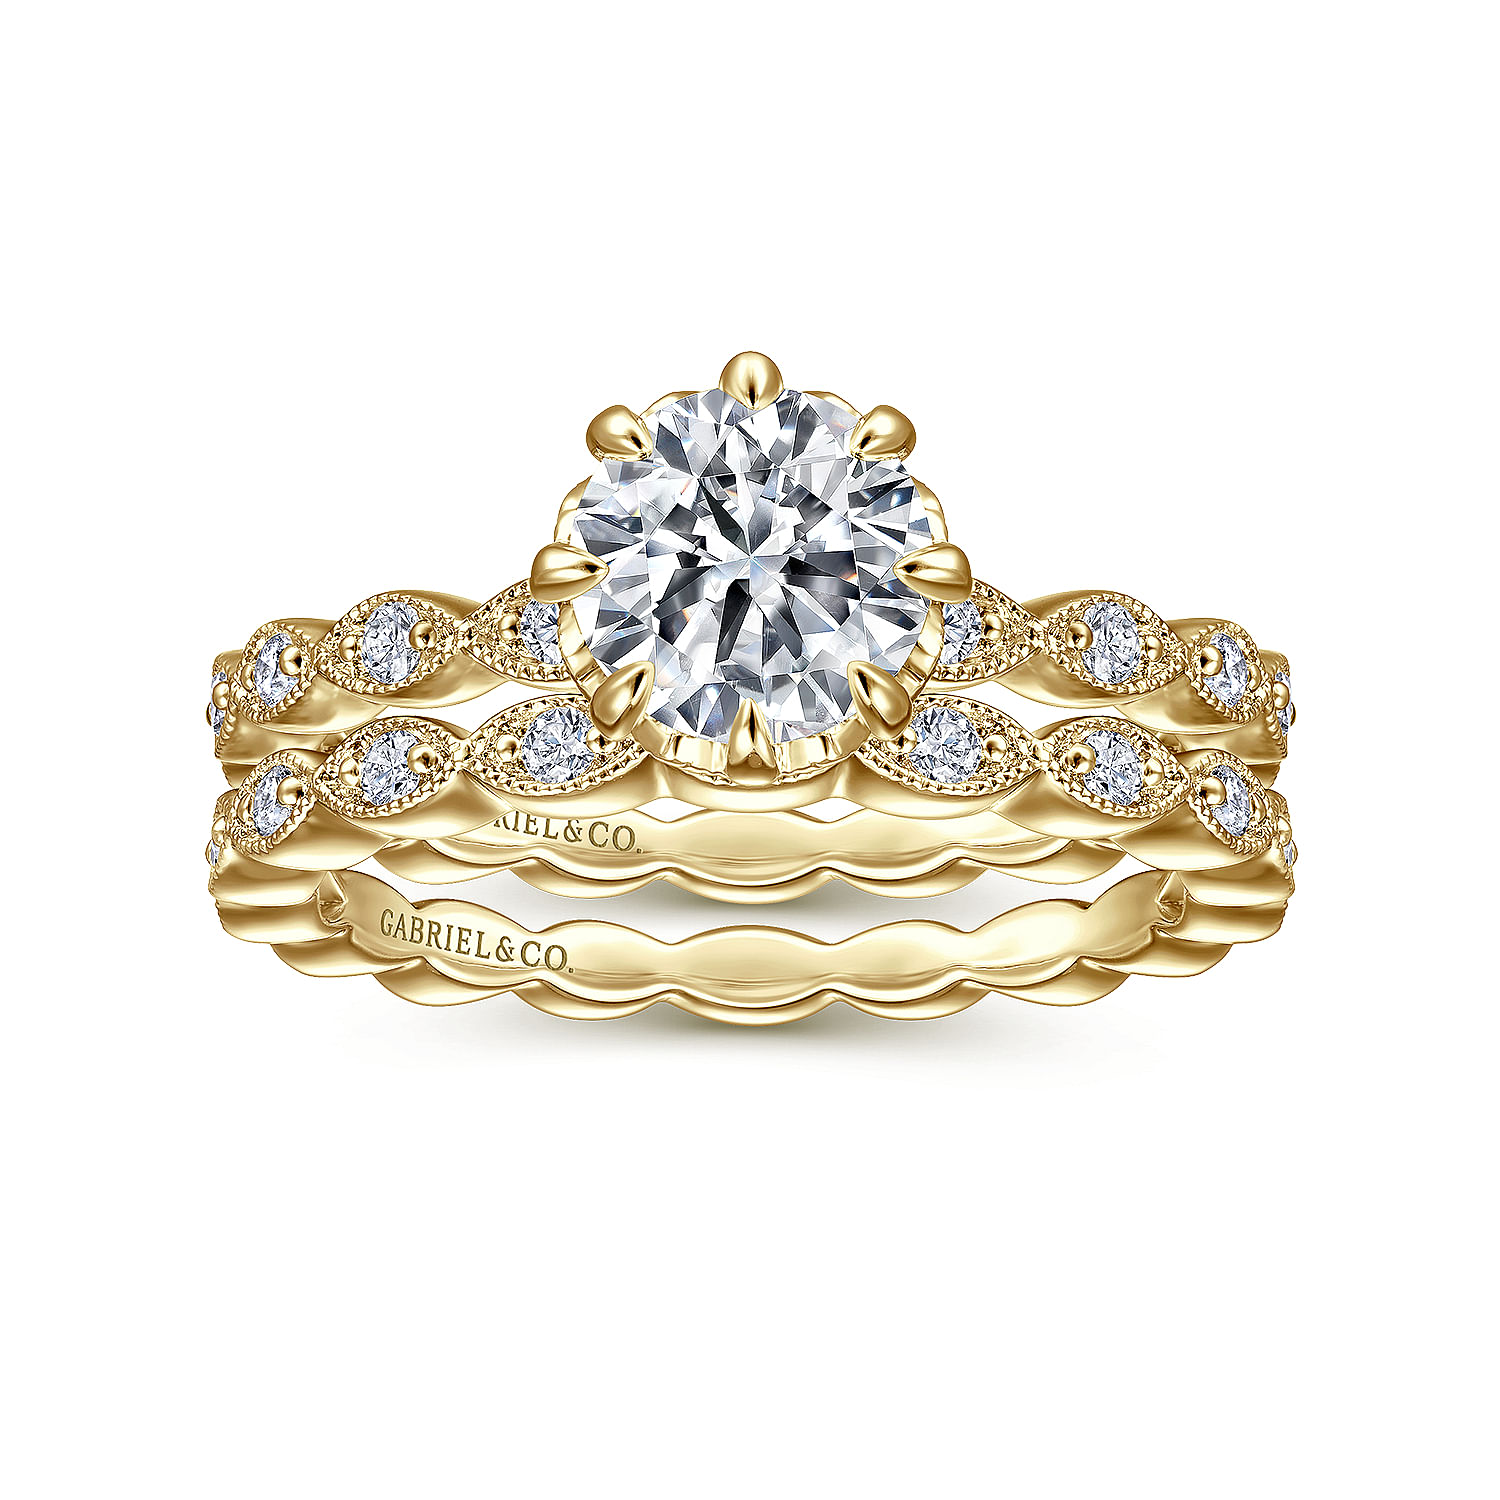 Vintage Inspired 14K Yellow Gold Round Diamond Engagement Ring